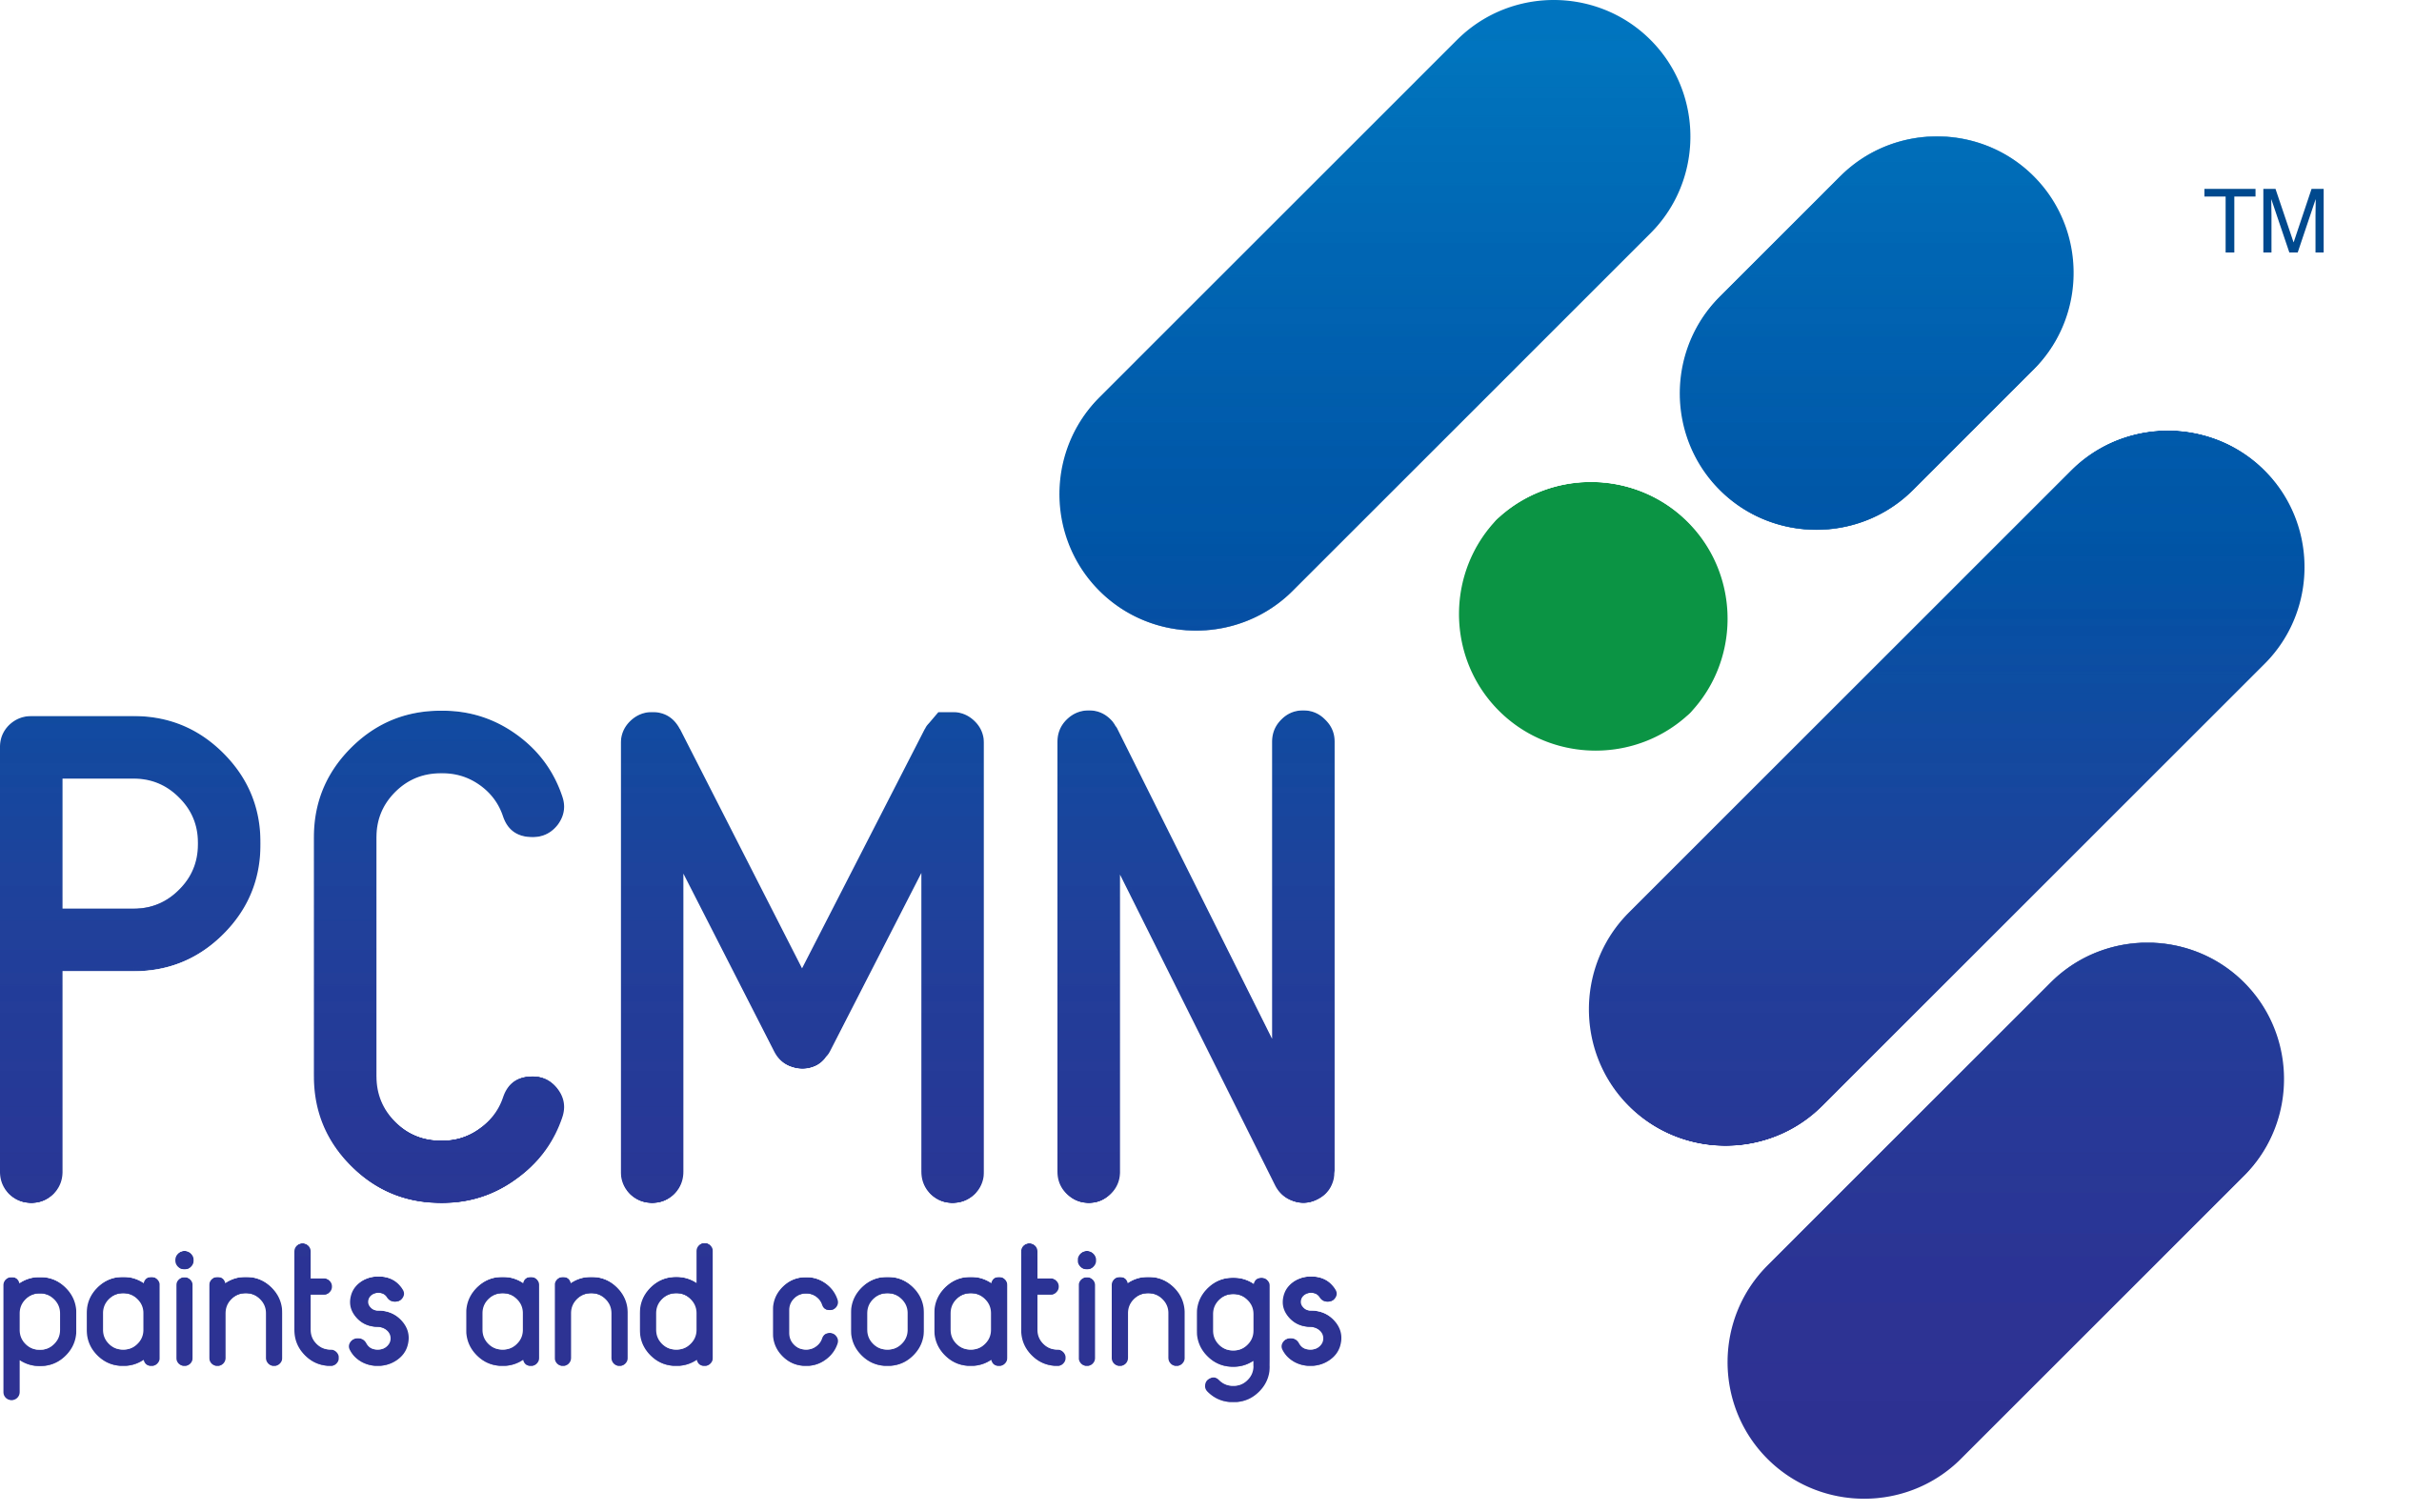 Pcmn Logo (1) 001